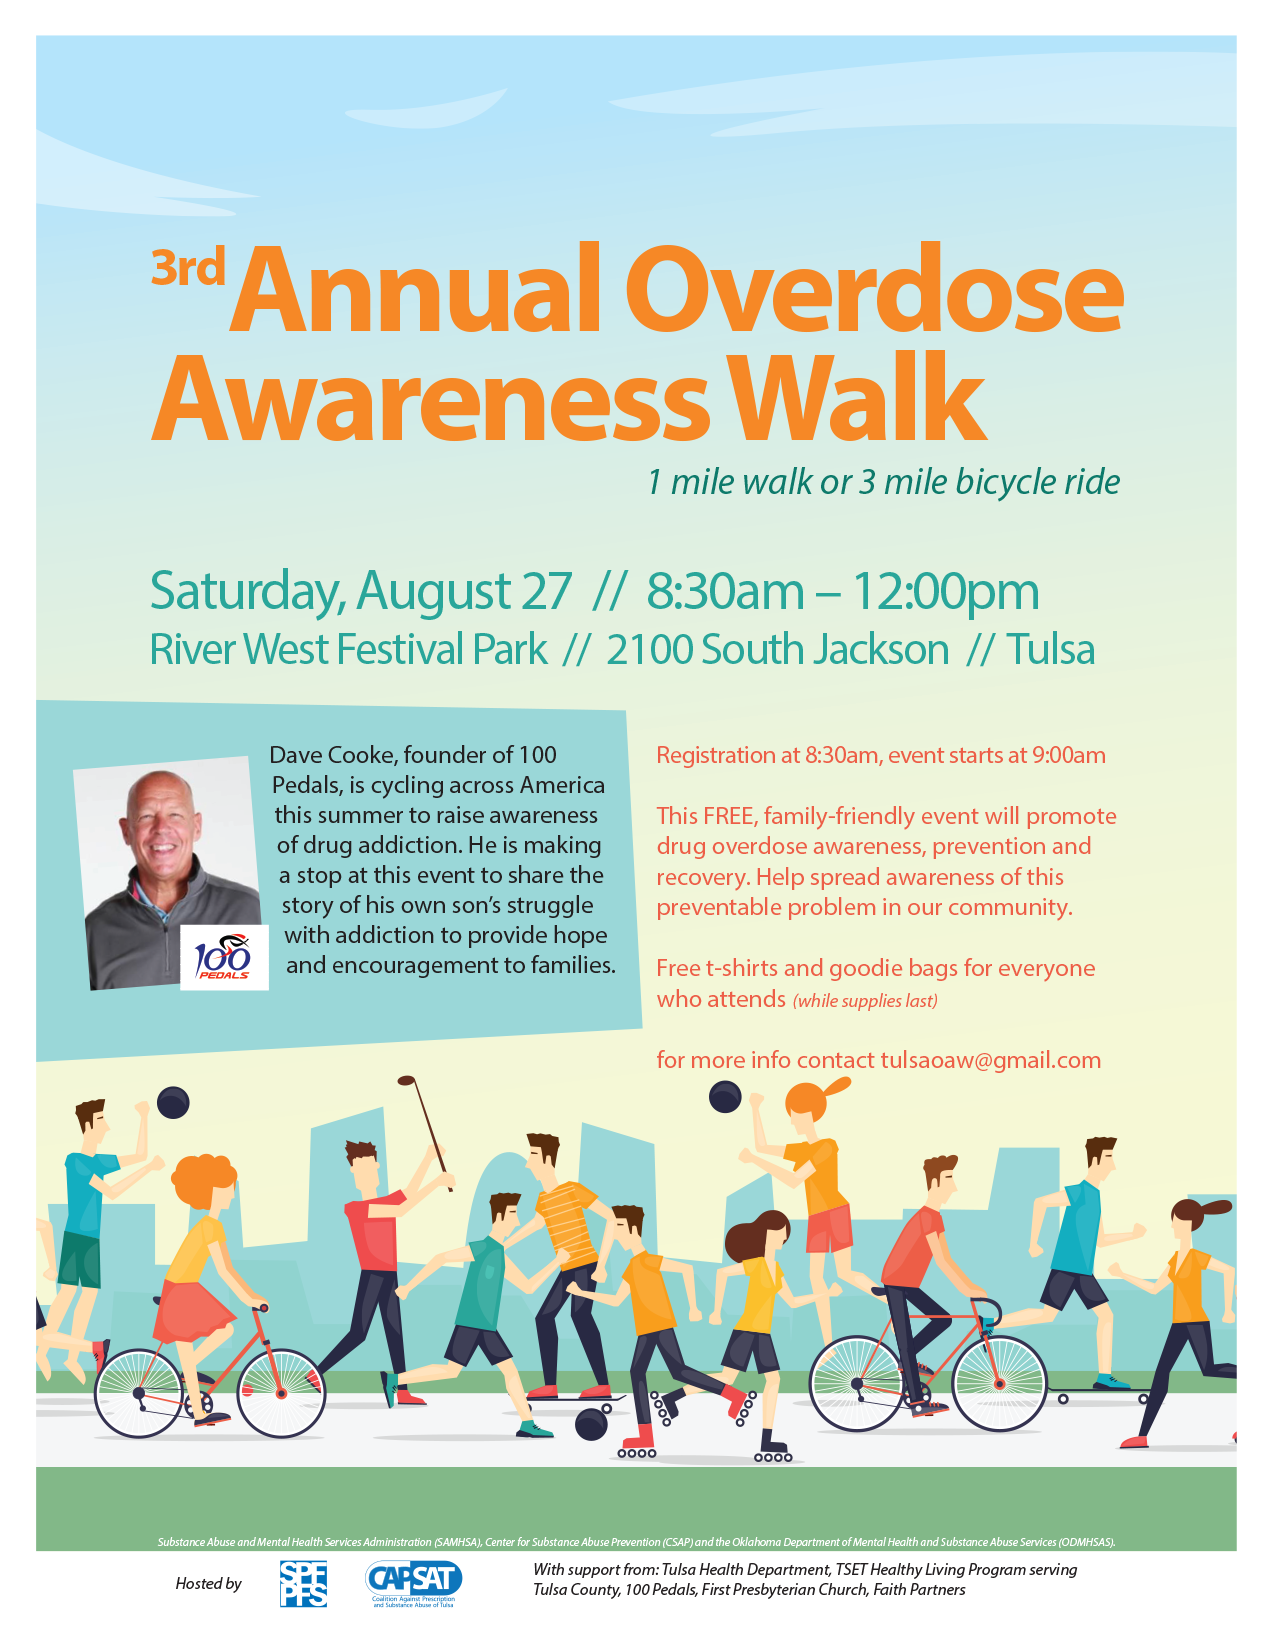 Third Annual Overdose Awareness Walk Tulsa Health Department